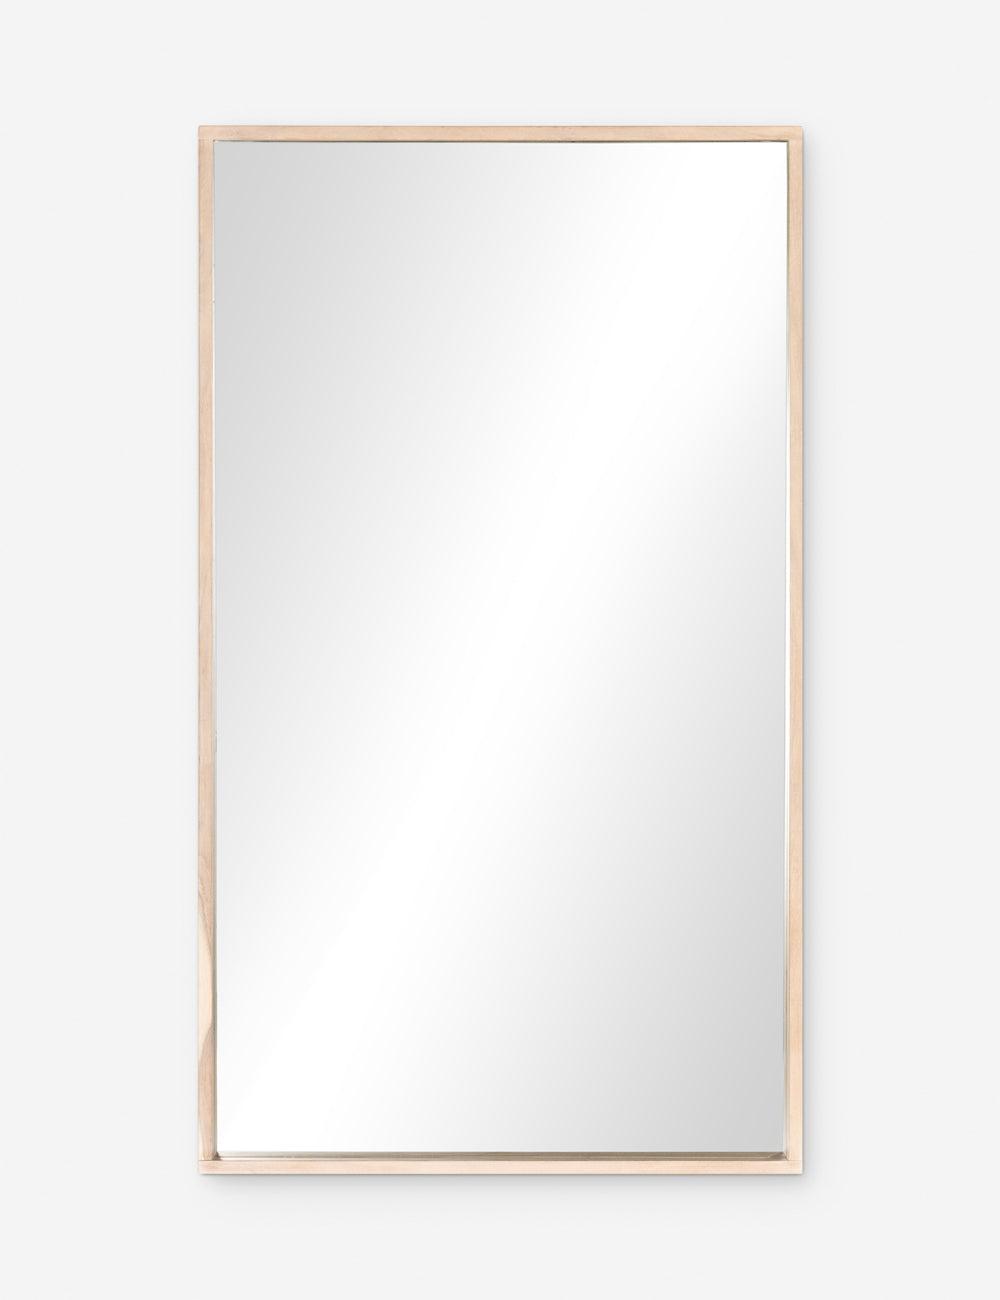 Elegance Whitewash Acacia Wood Full-Length Rectangular Mirror